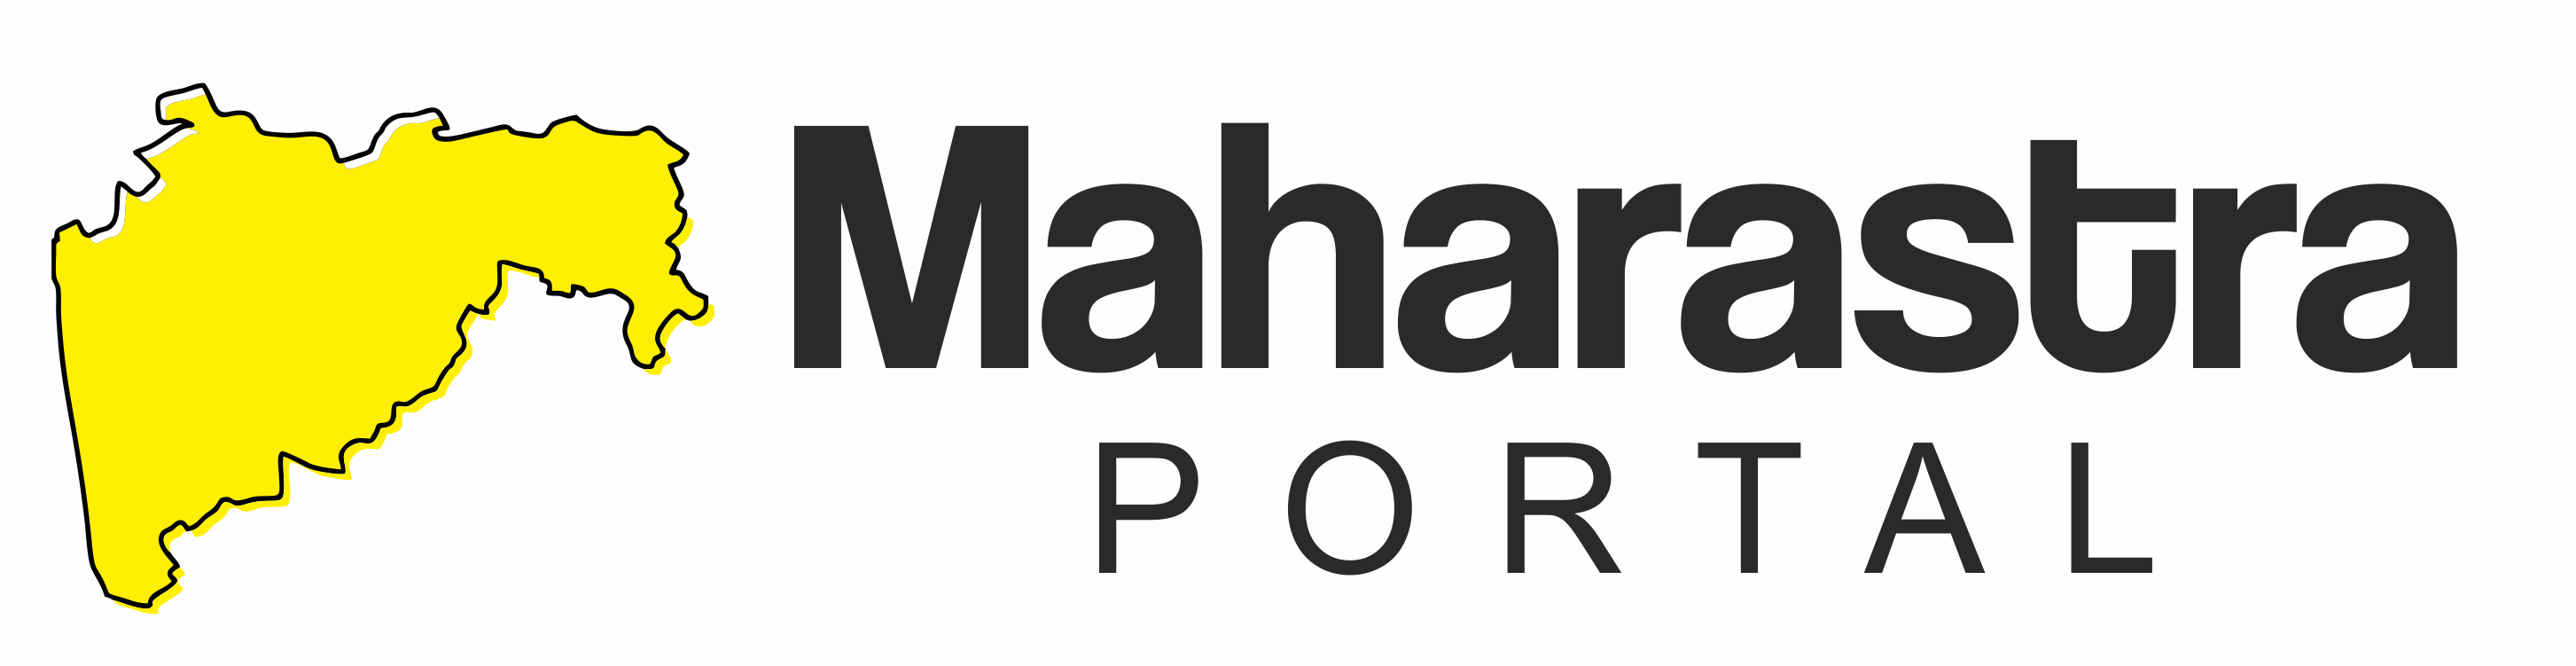 Maharastra Portal